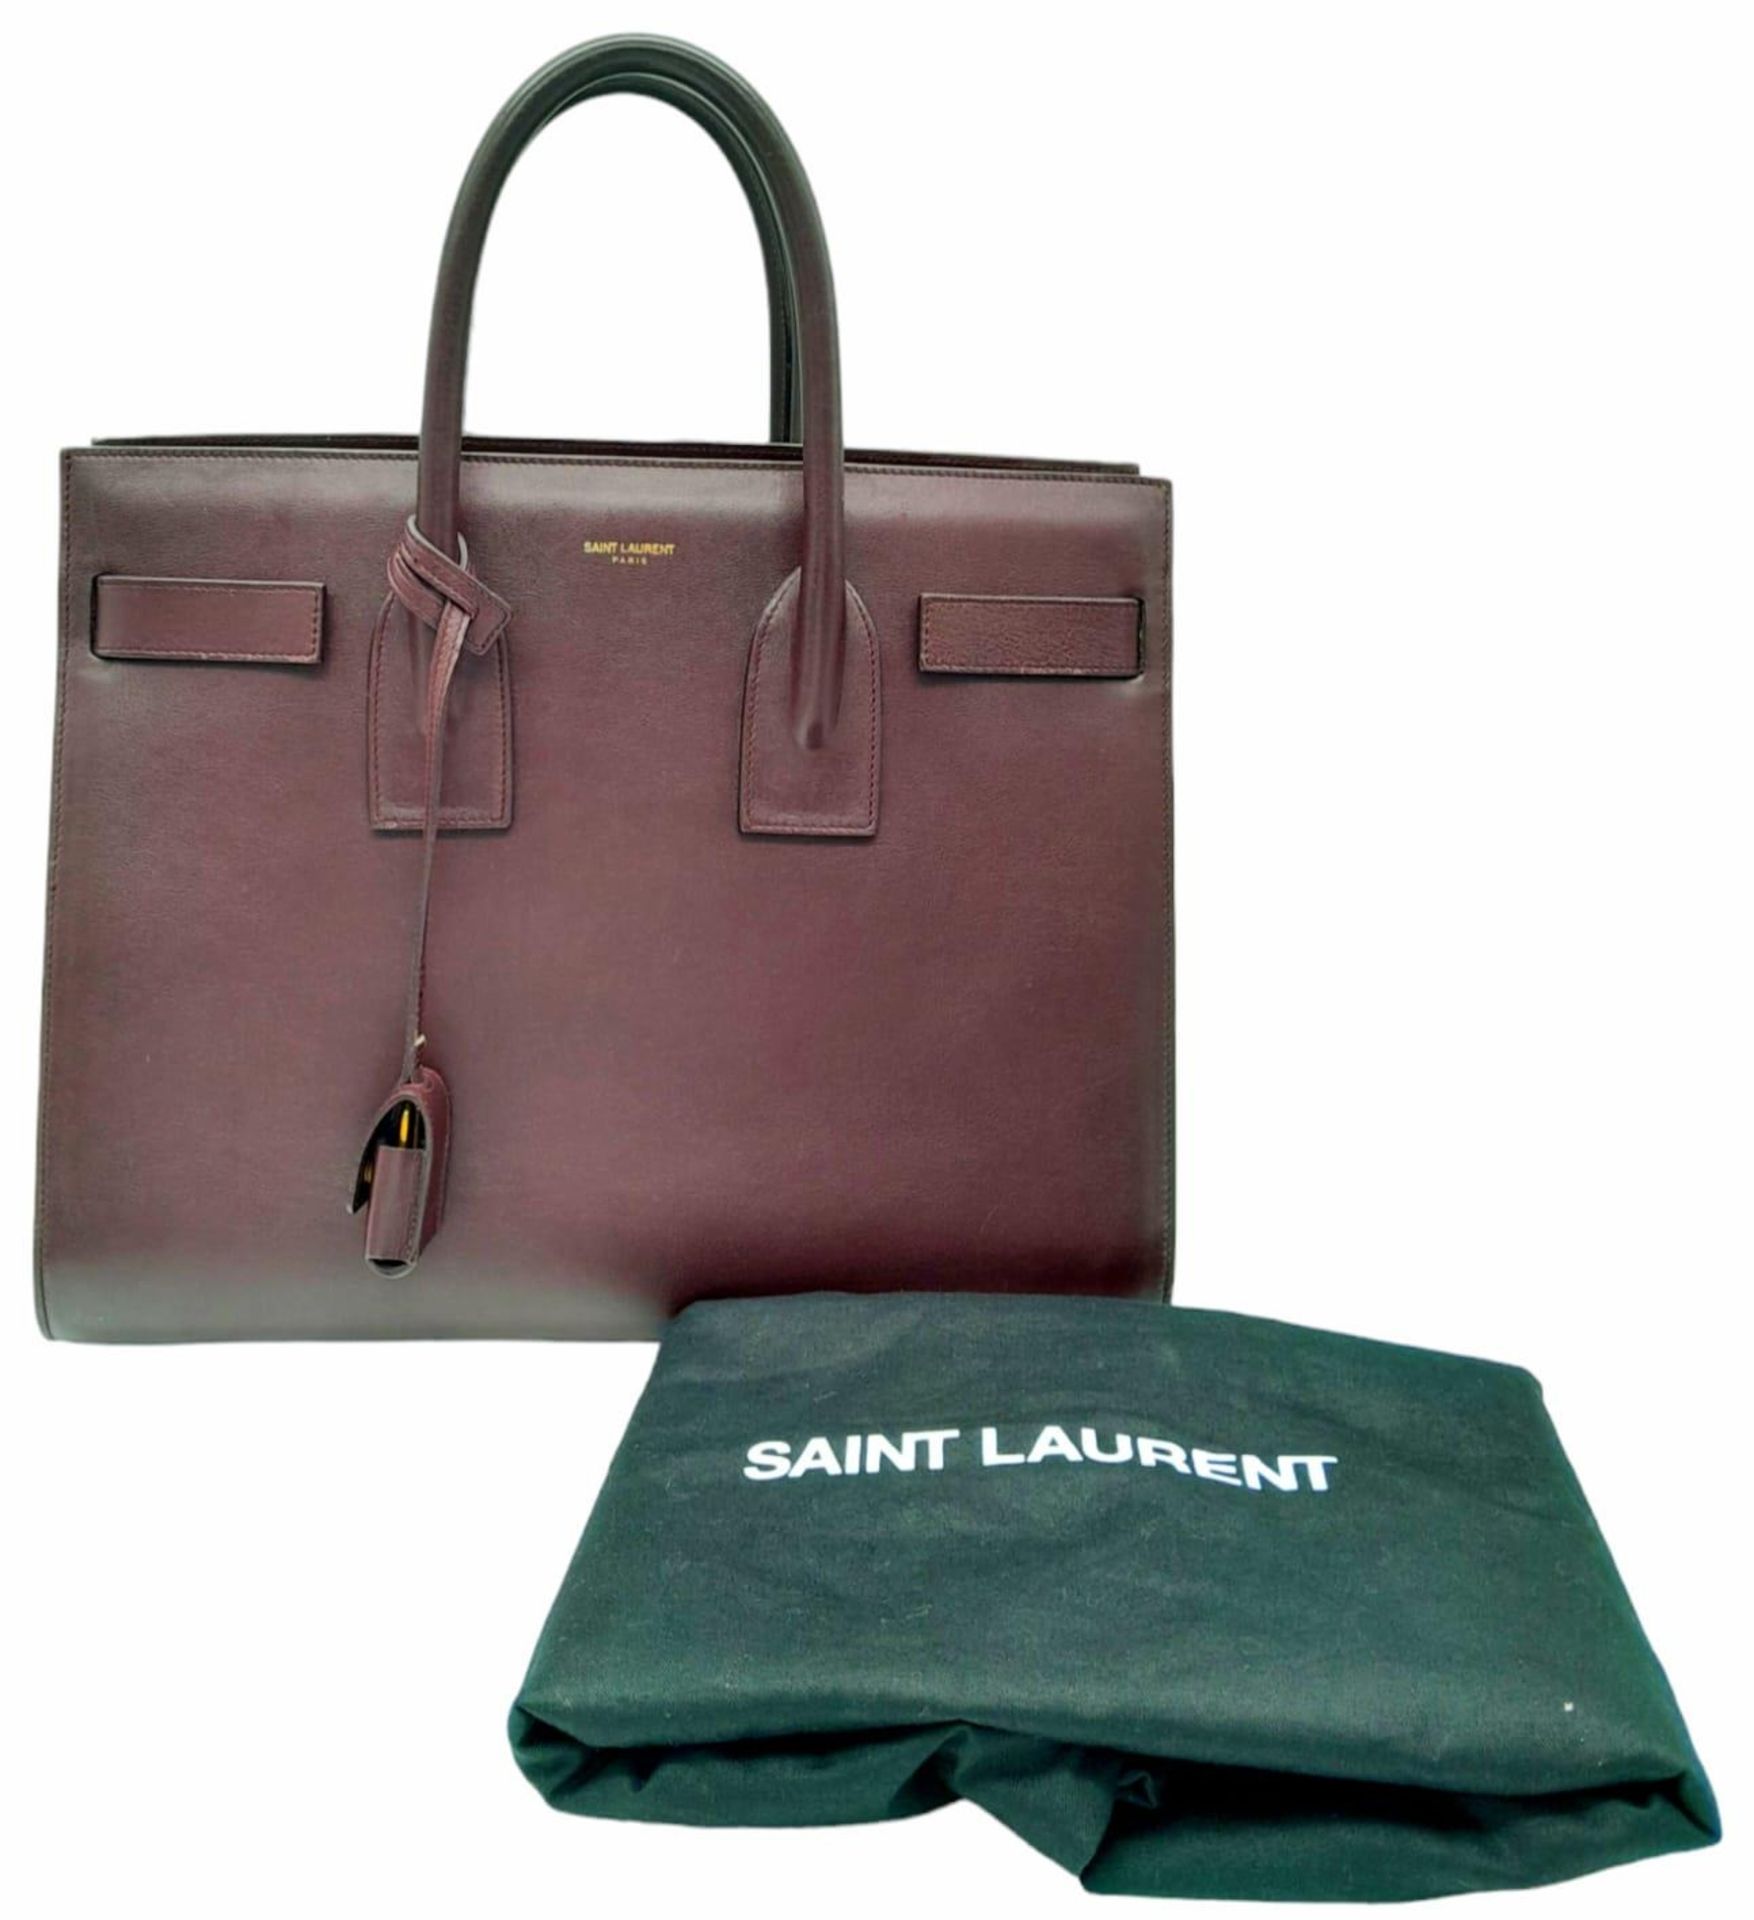 A Saint Laurent Sac De Jour Burgundy Handbag. Leather Exterior, Gold Tone Hardware, Double Handle in - Image 2 of 11